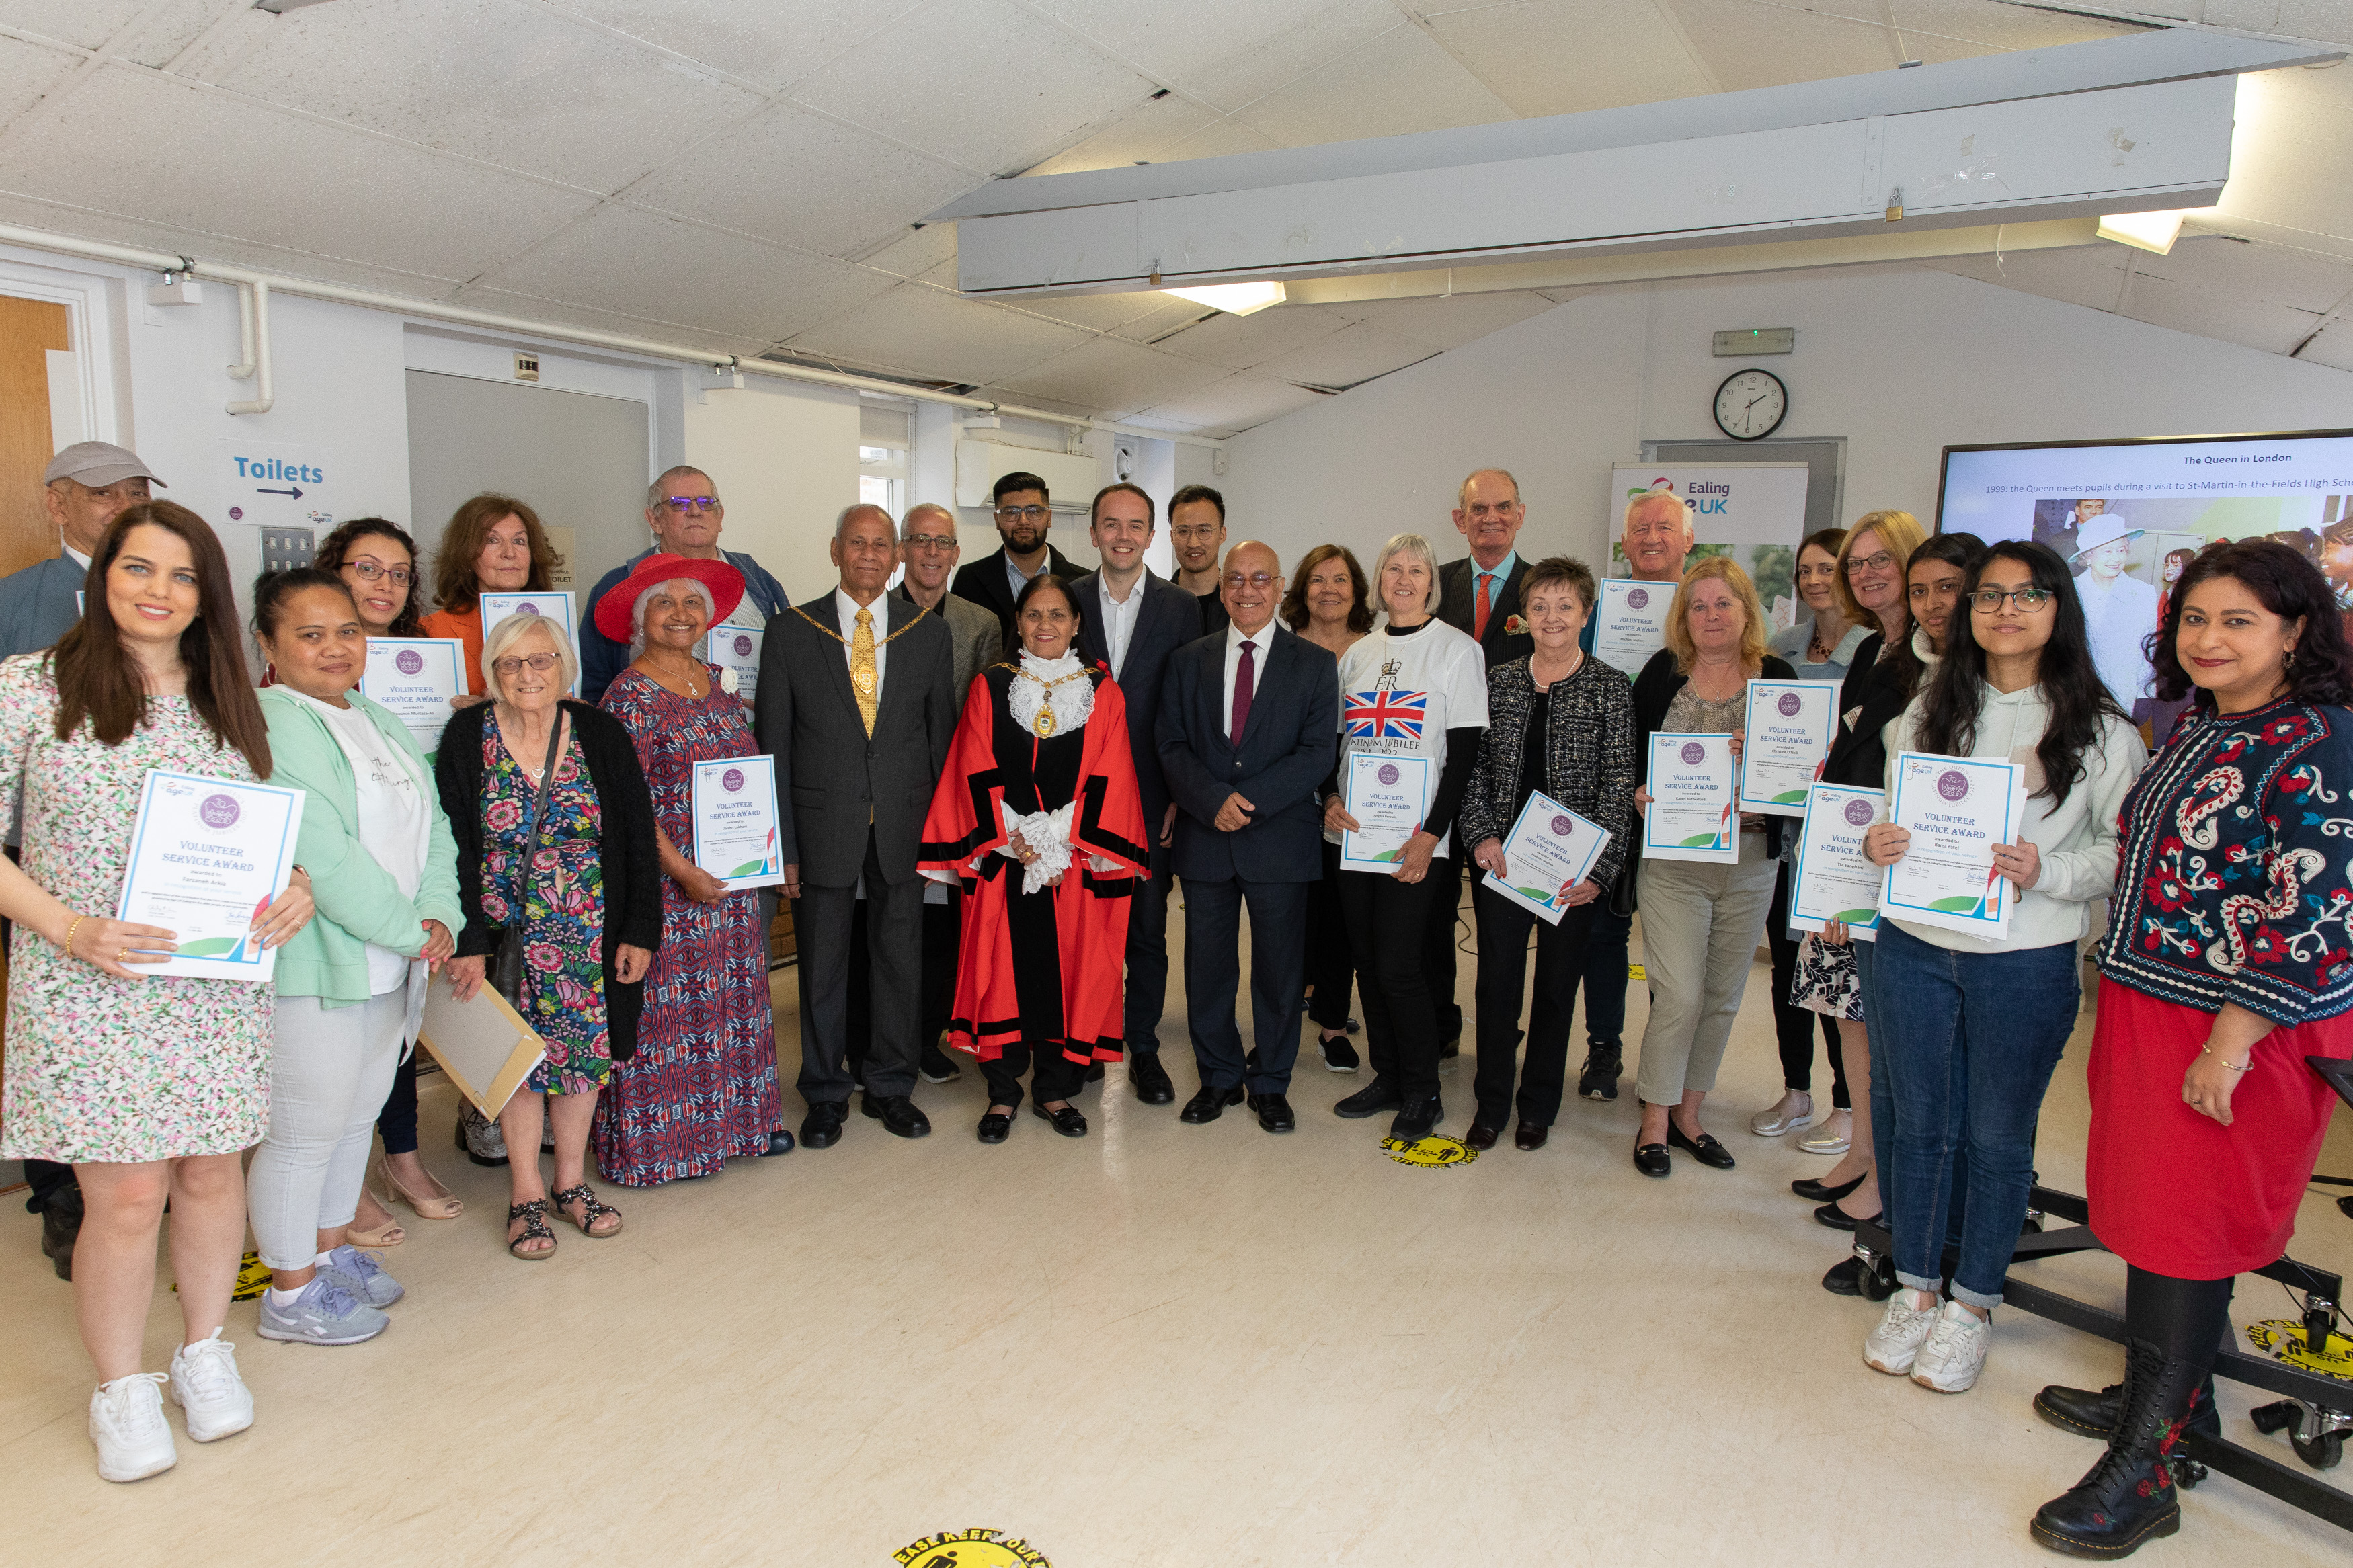 Age UK Ealing's volunteers at the Platinum Jubilee event, June 2022